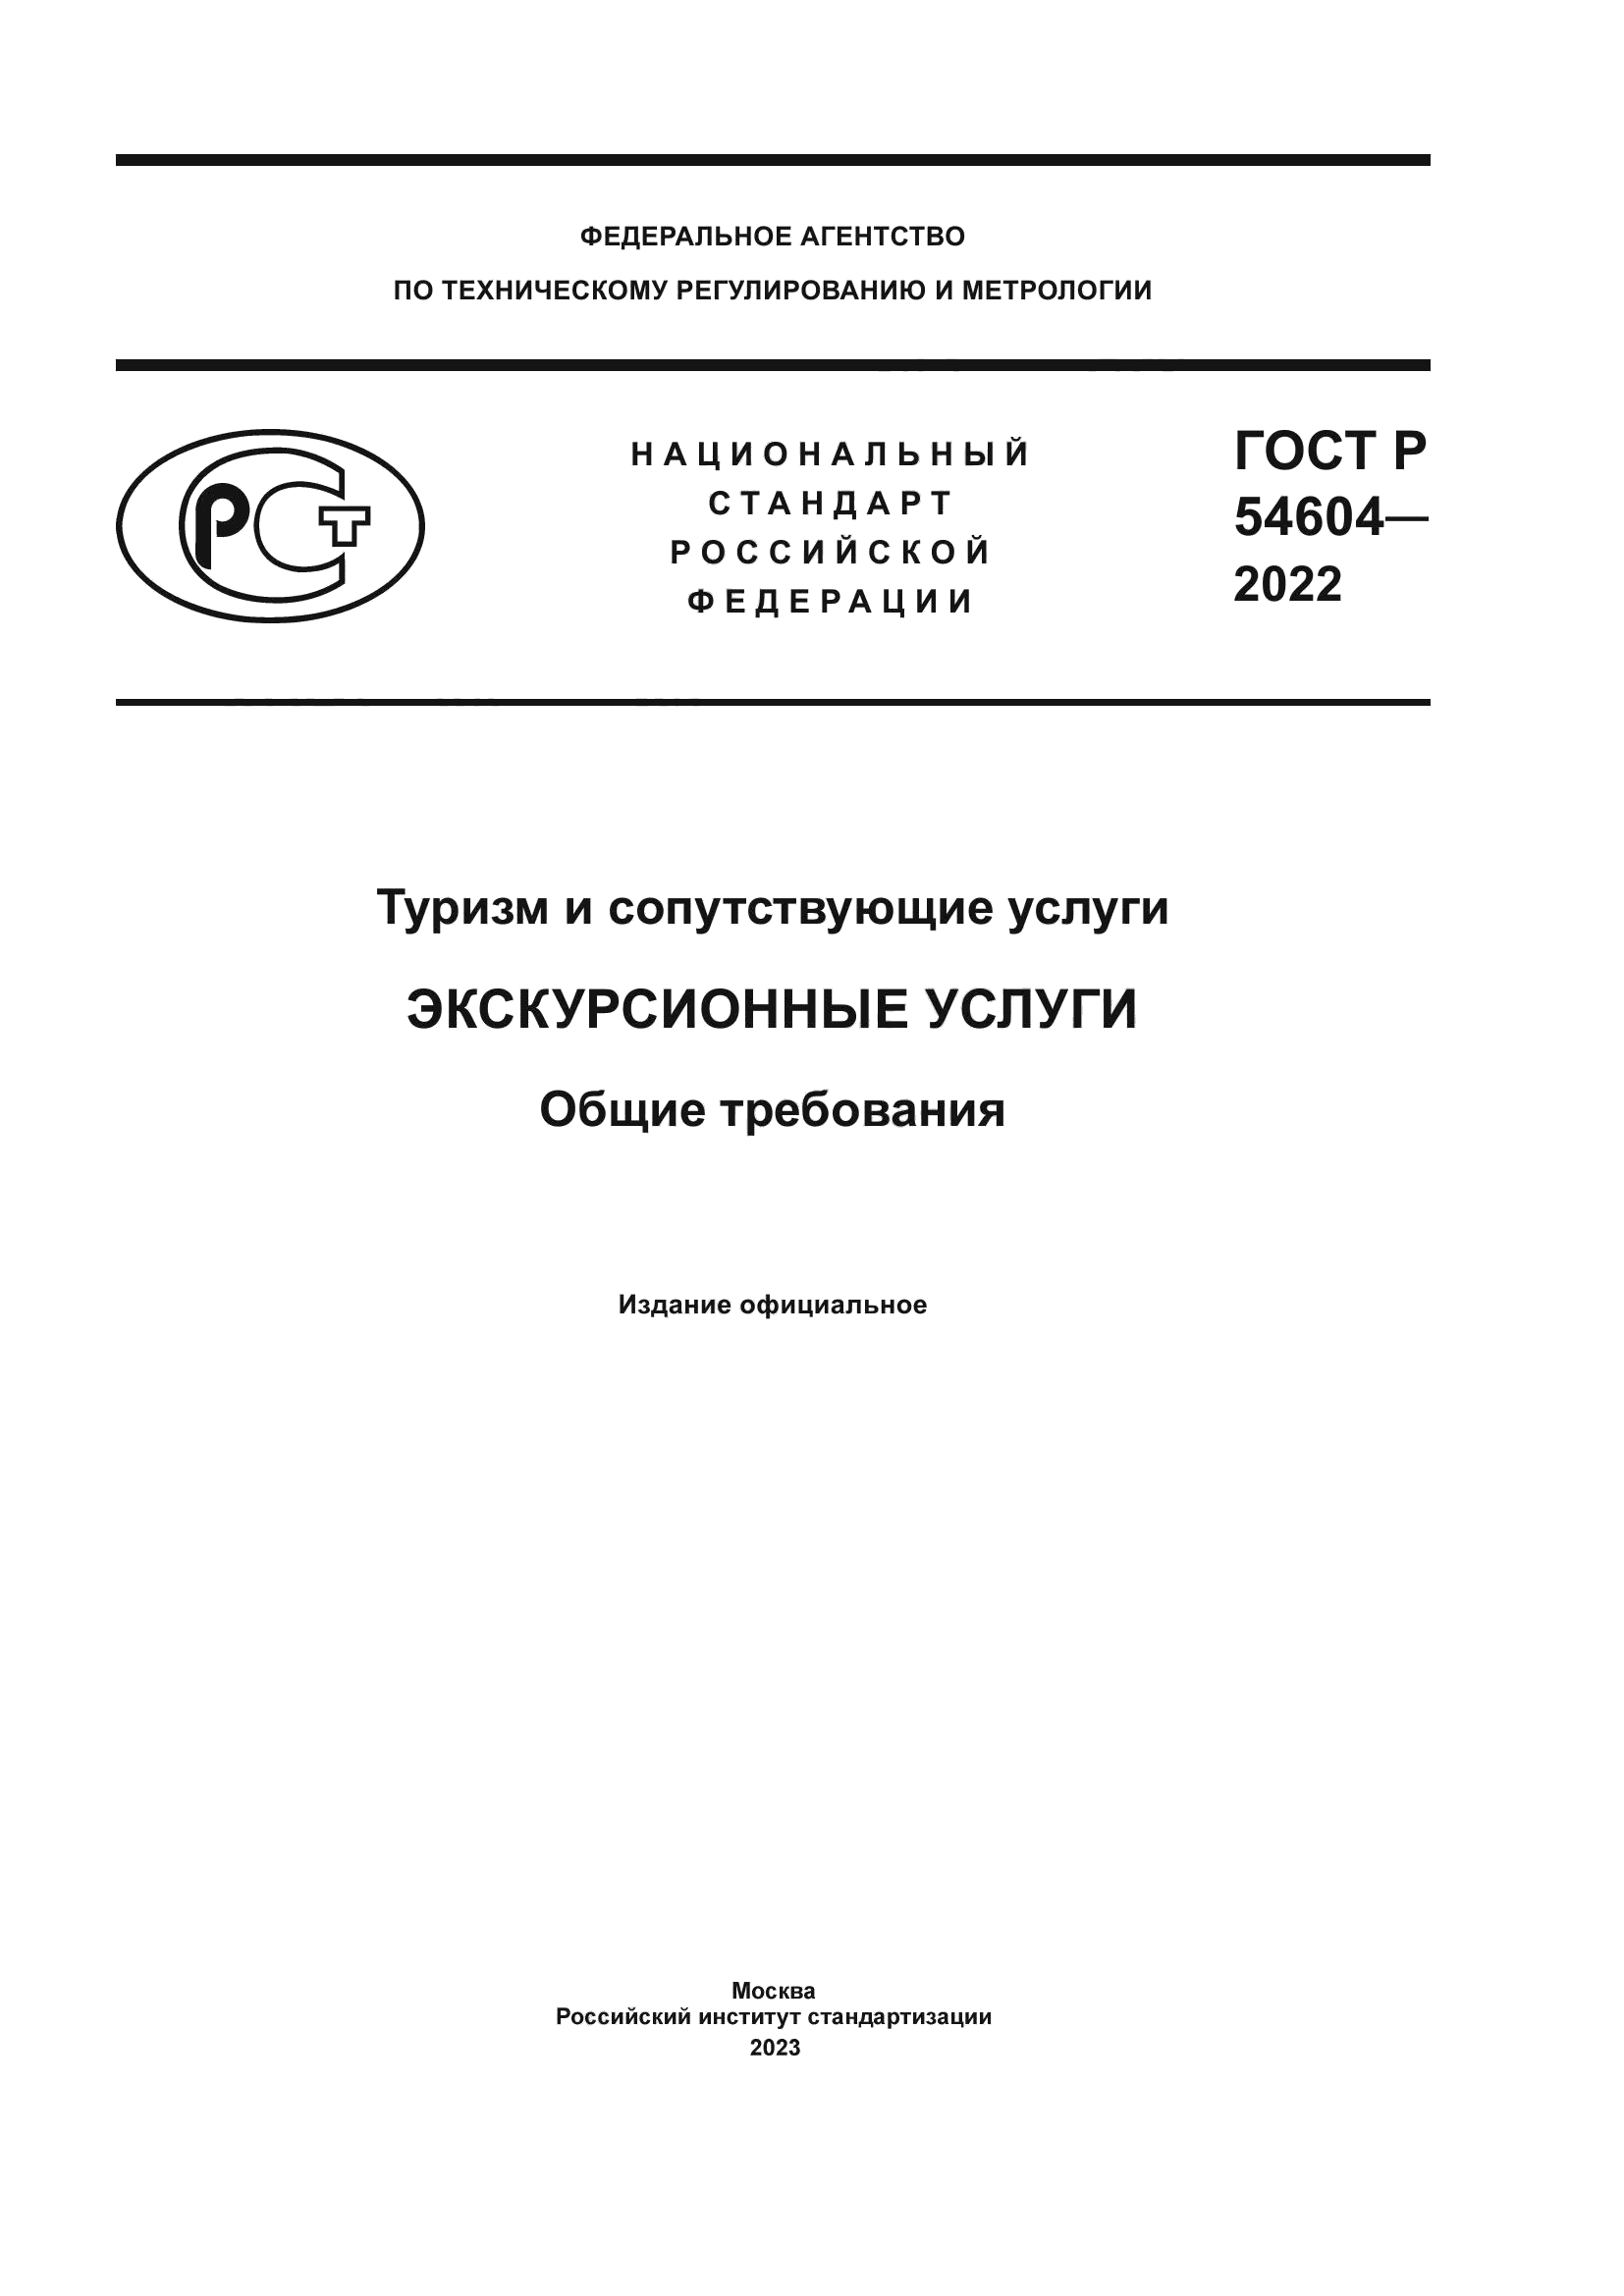 ГОСТ Р 54604-2022